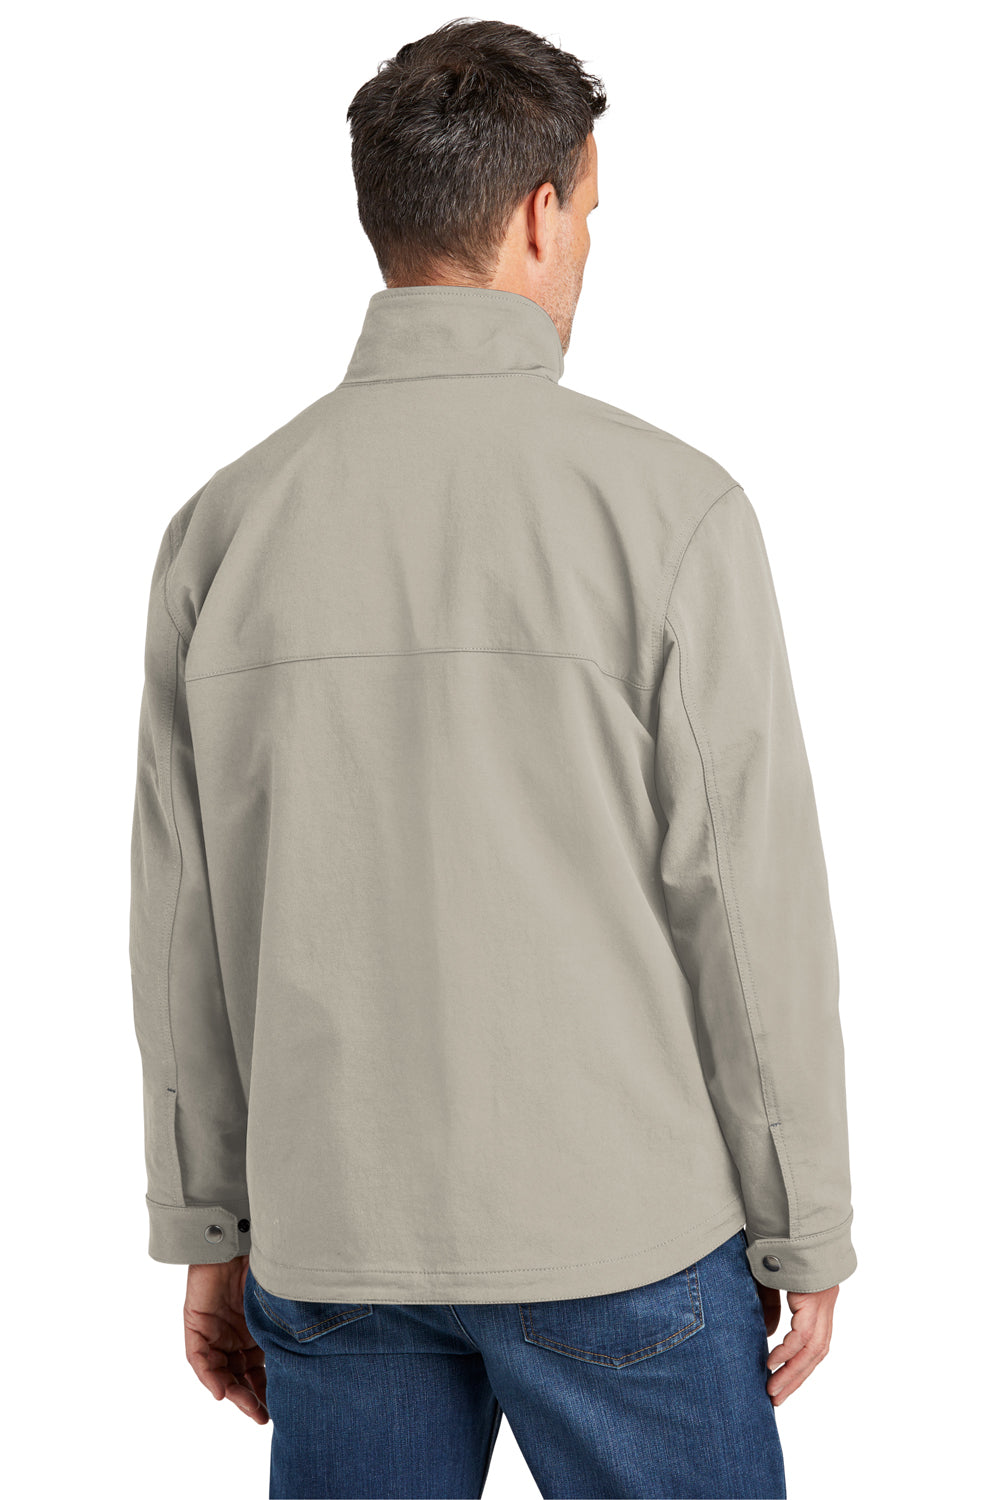 Carhartt CT105534 Mens Super Dux Wind & Water Resistant Full Zip Jacket Greige Grey Model Back